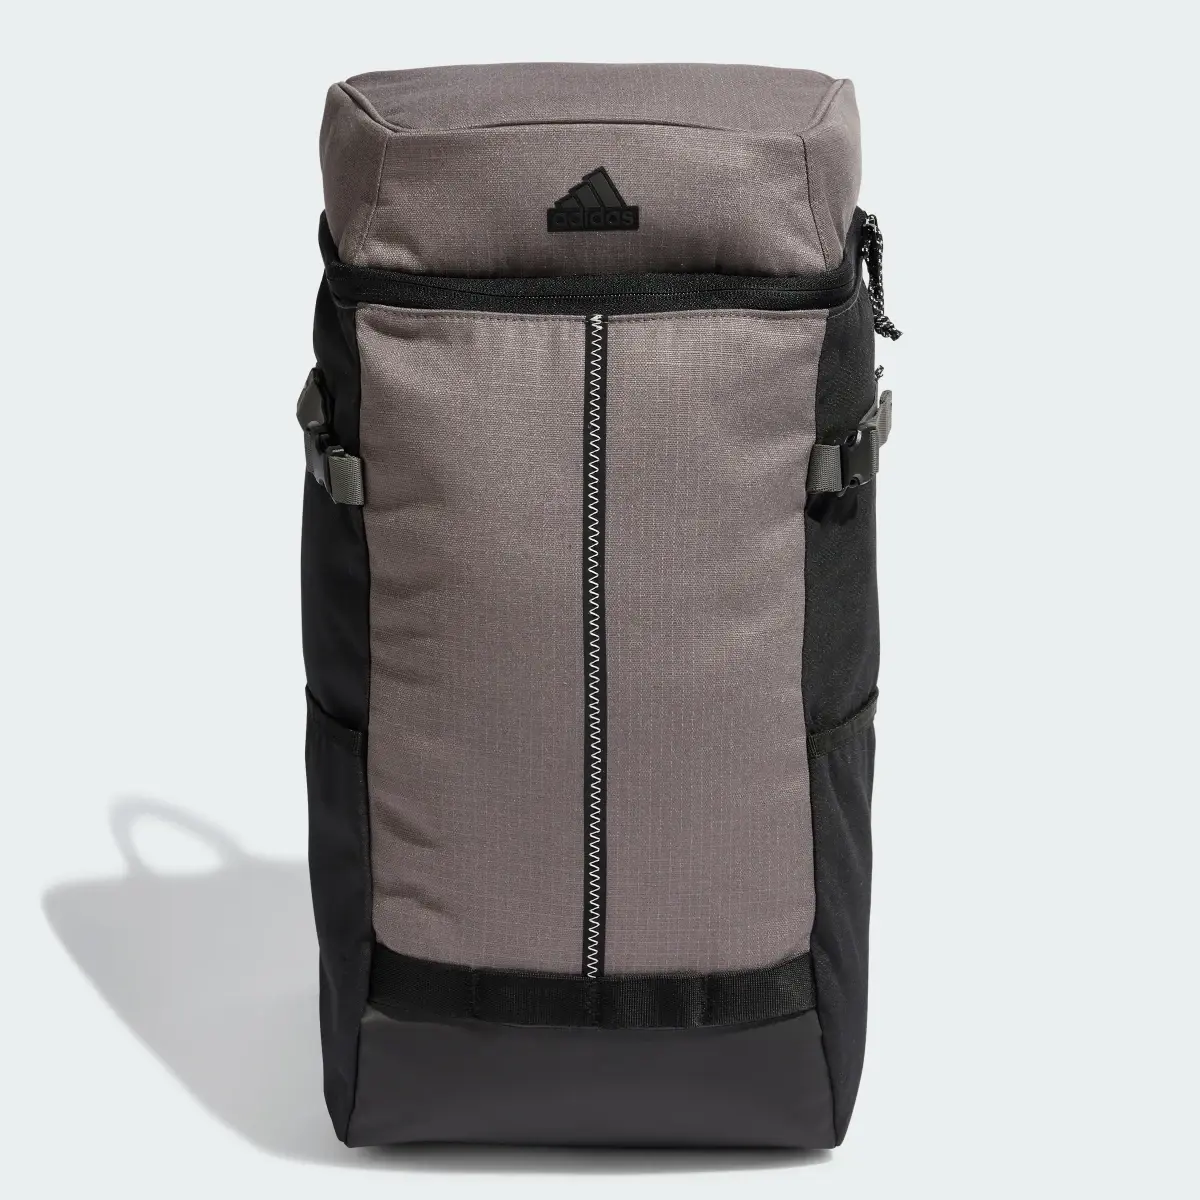 Adidas Xplorer Backpack. 1